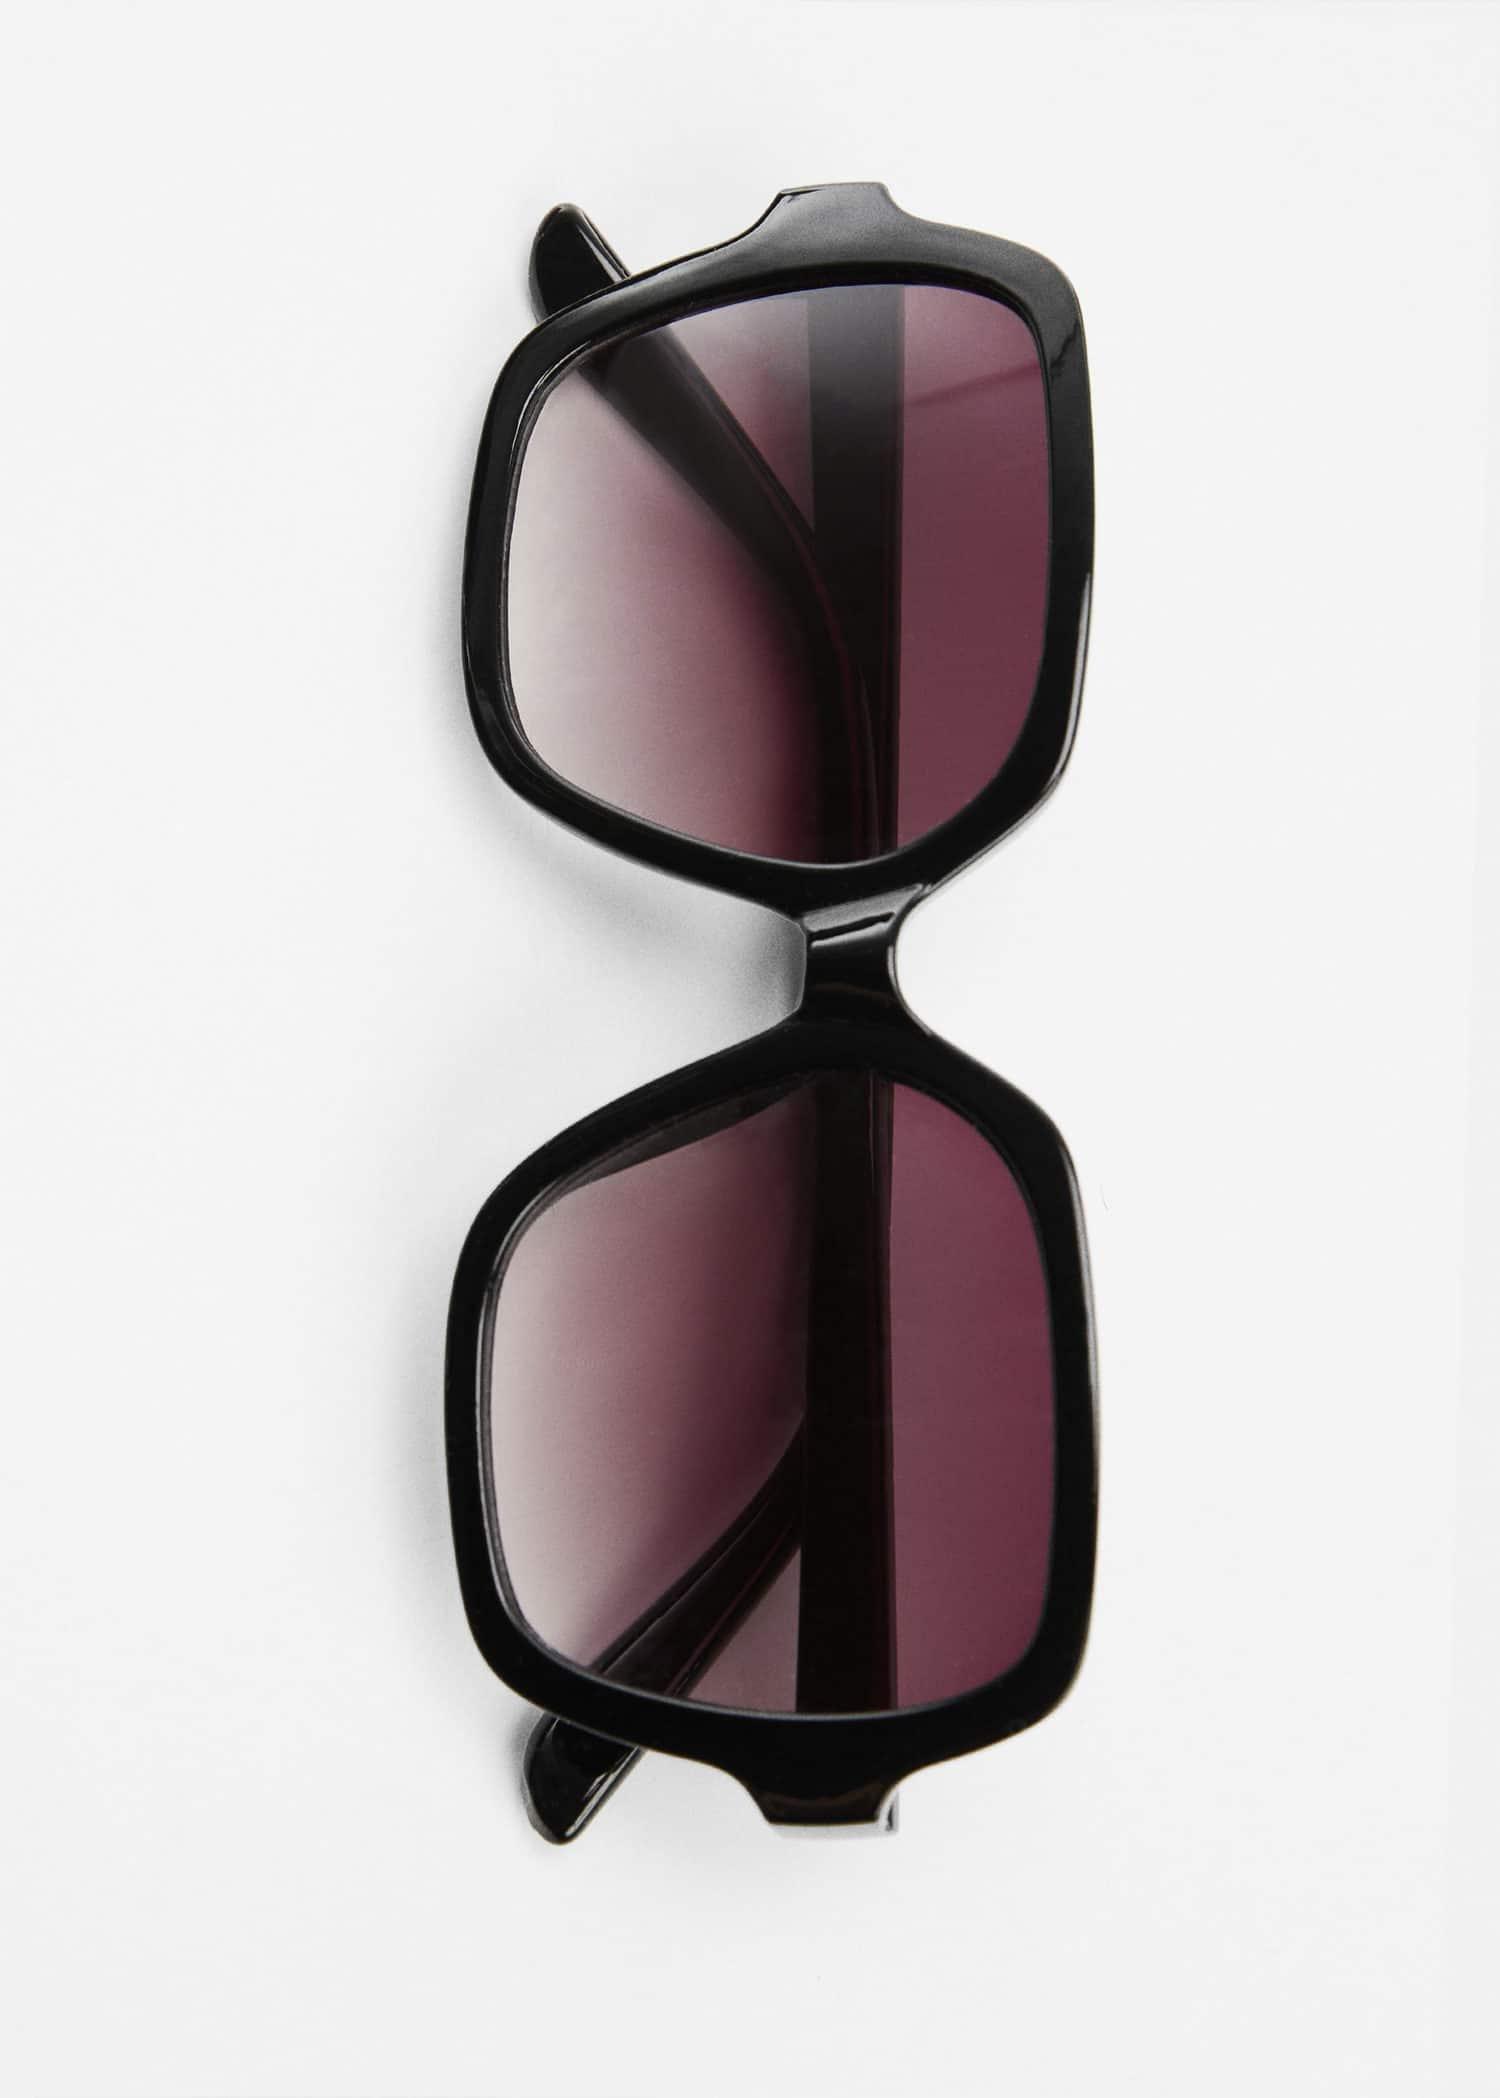 Mango - Black Square Sunglasses